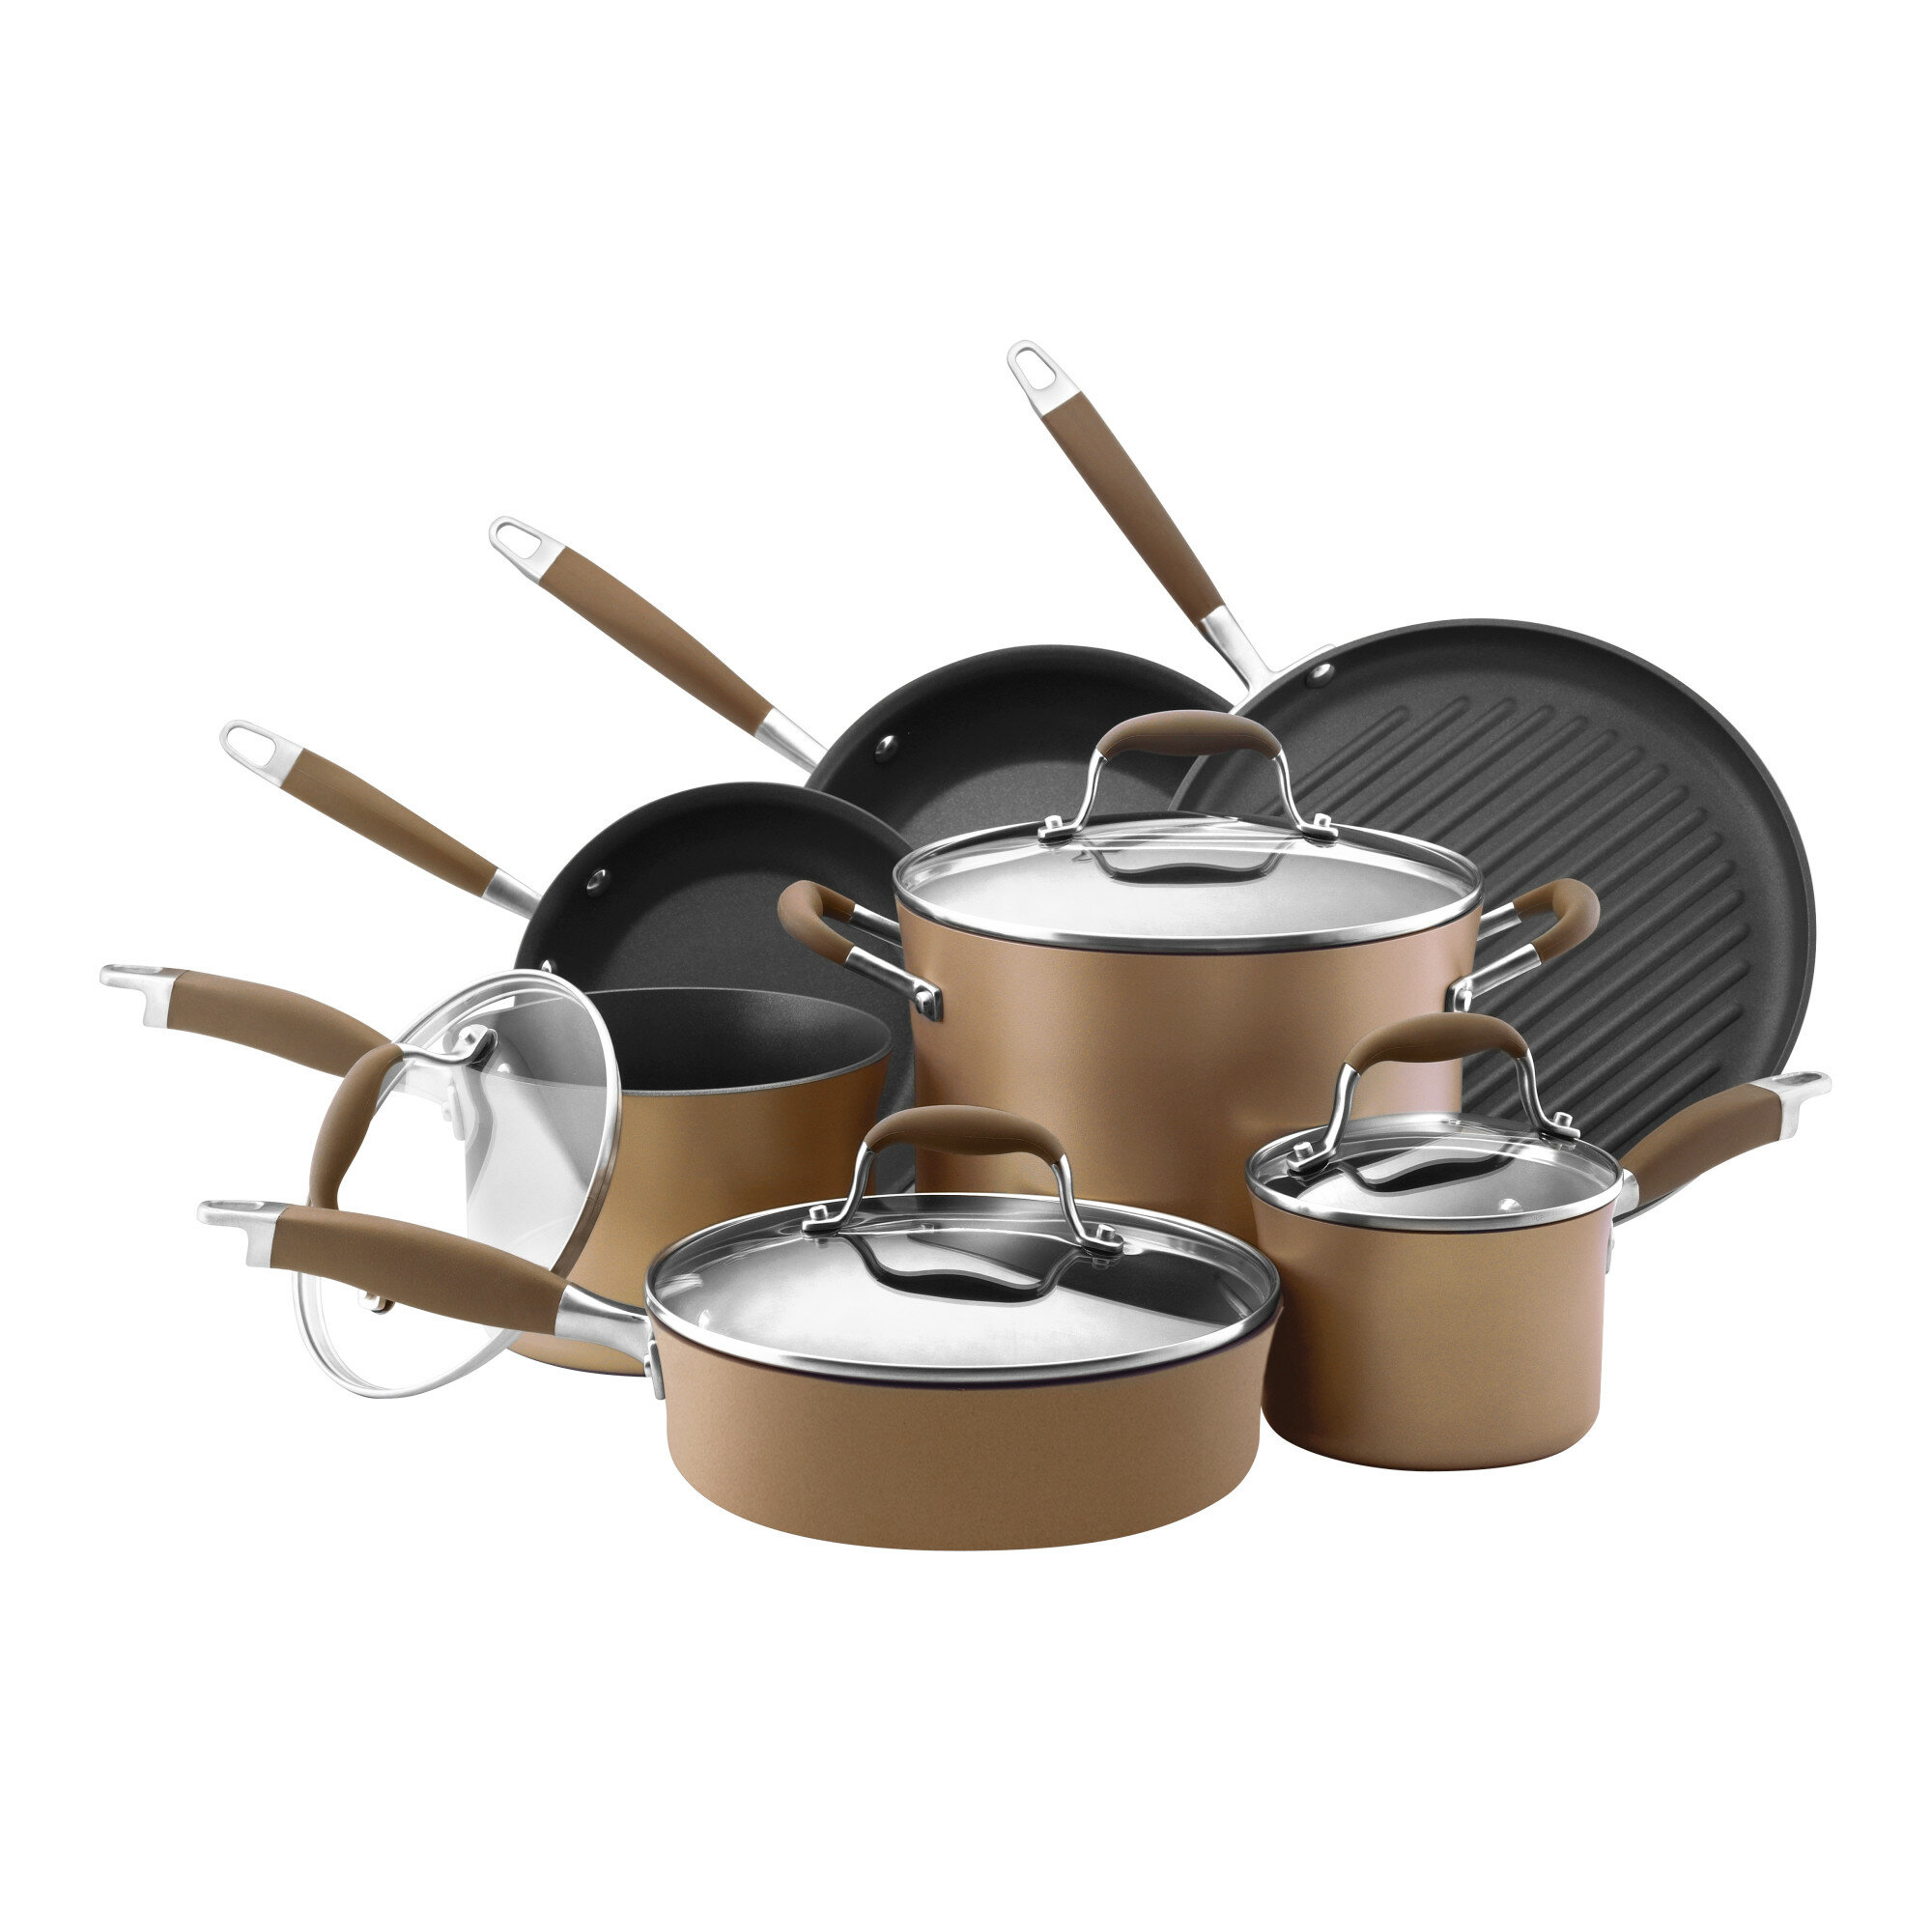 Anolon Advanced Bronze Hard-Anodized Nonstick Large Frying Pan